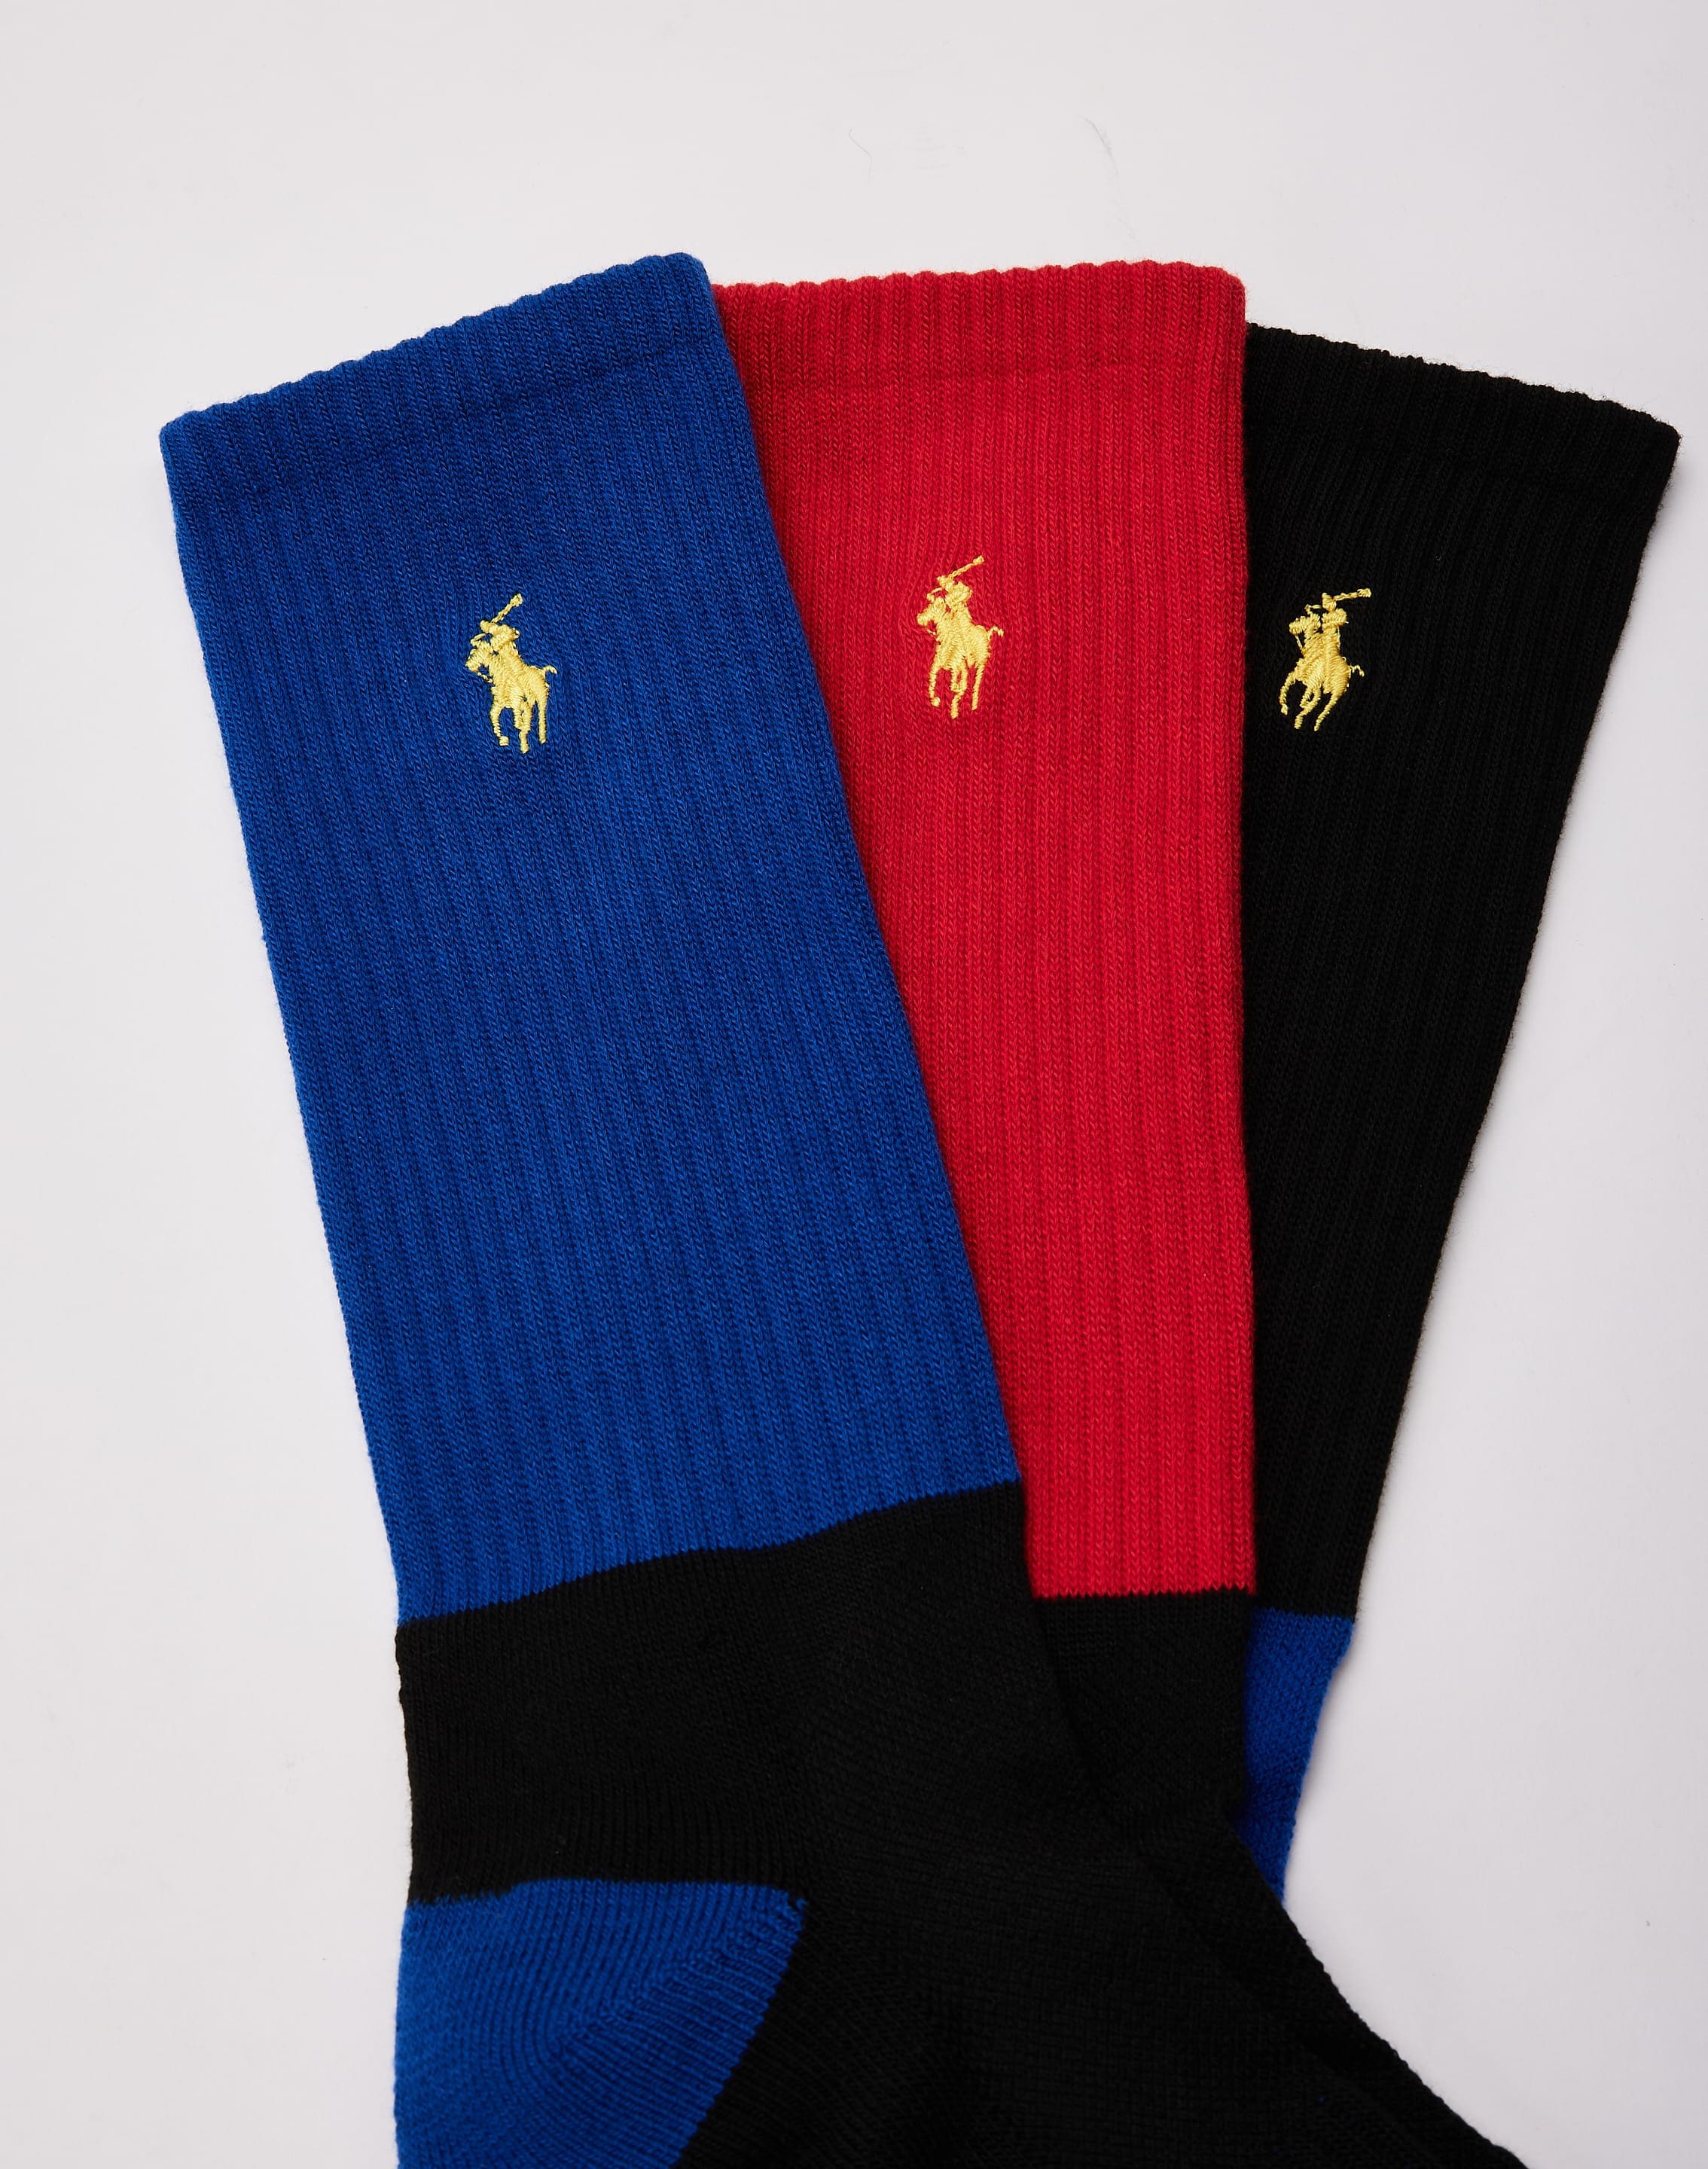 Polo Ralph Lauren Underwear Cotton-blend Crew Sock 6-pack - Regular socks 